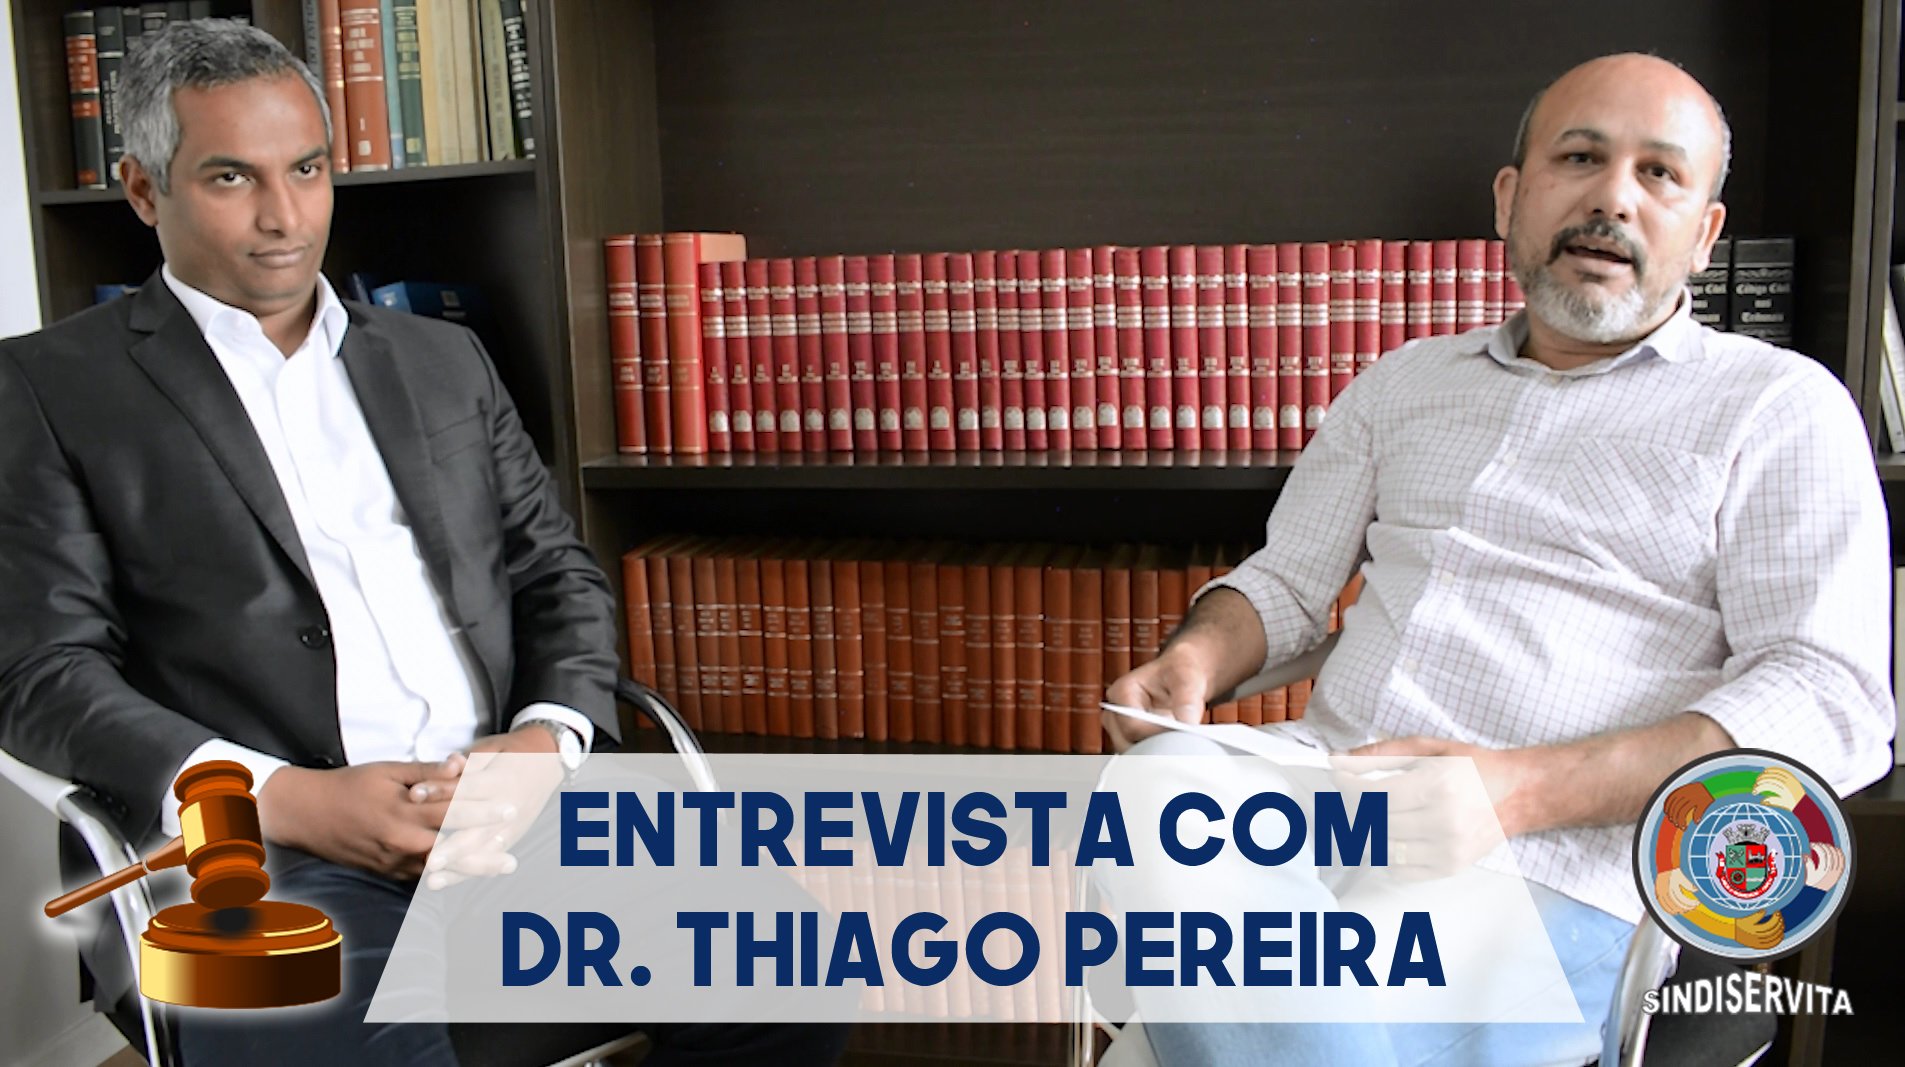 Diretor Cláudio Fernandes entrevista o Dr. Thiago Pereira, advogado do Sindiservita